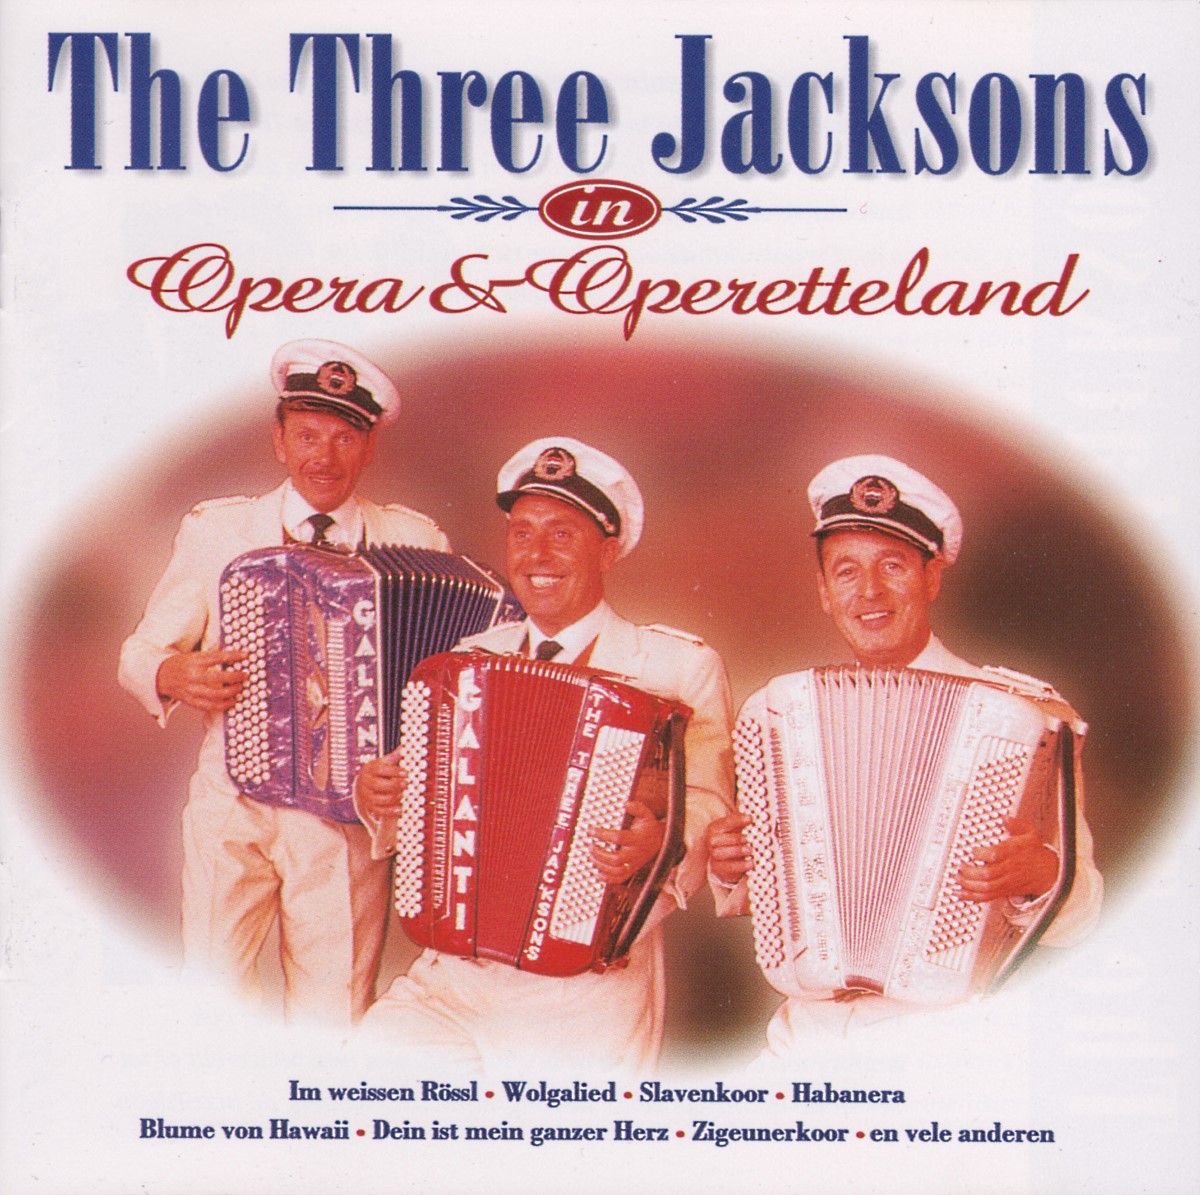 The Three Jacksons - In Opera En Operetteland (1997)